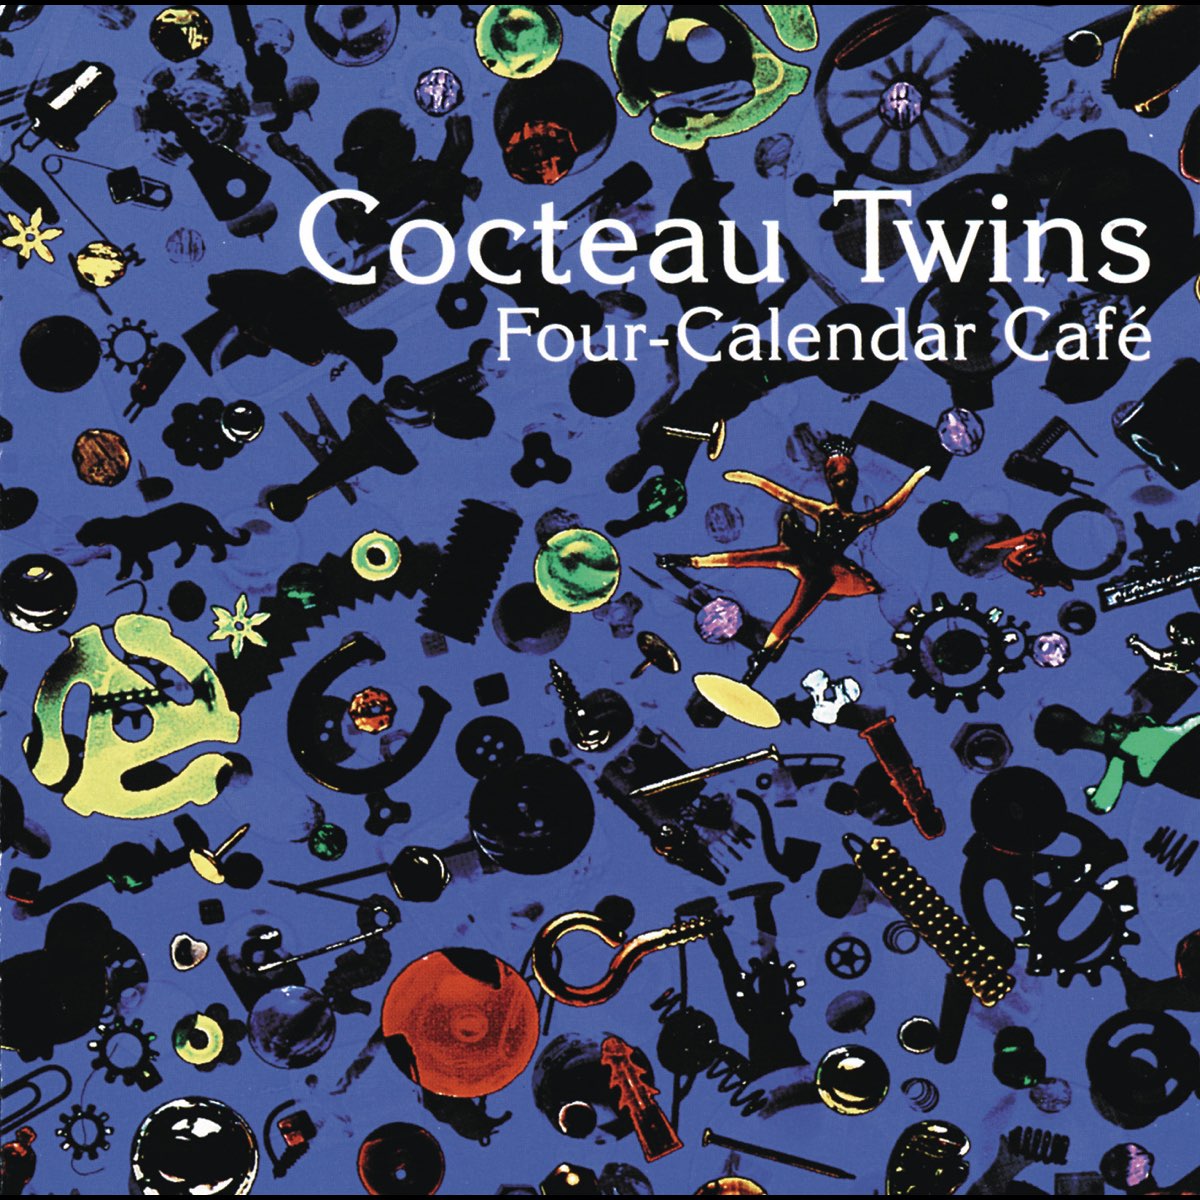 ‎FourCalendar Cafe by Cocteau Twins on Apple Music